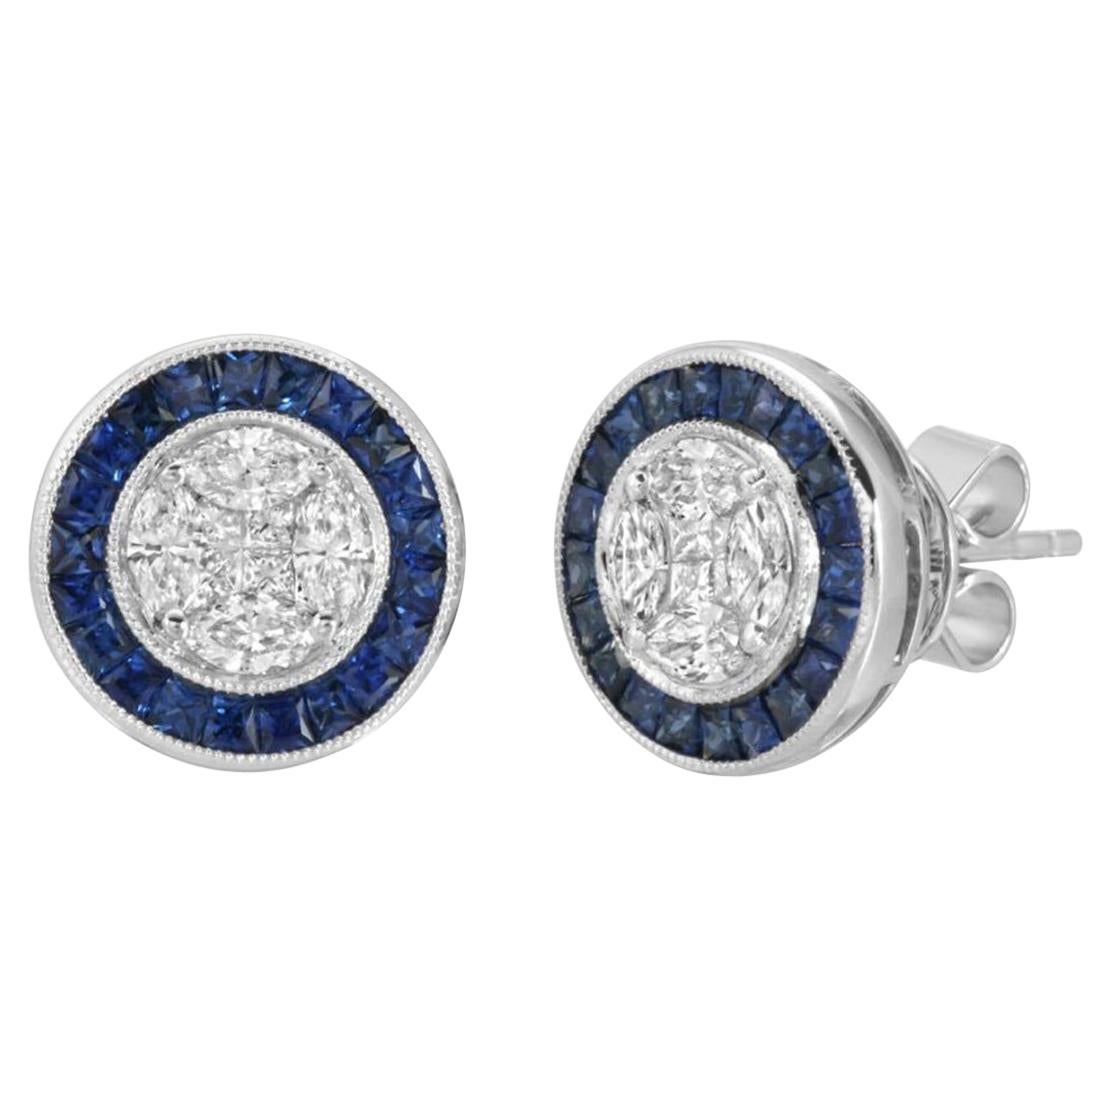 1.09 CT Natural Blue Sapphire & 0.89 CT Diamonds18K White Gold Stud Earrings